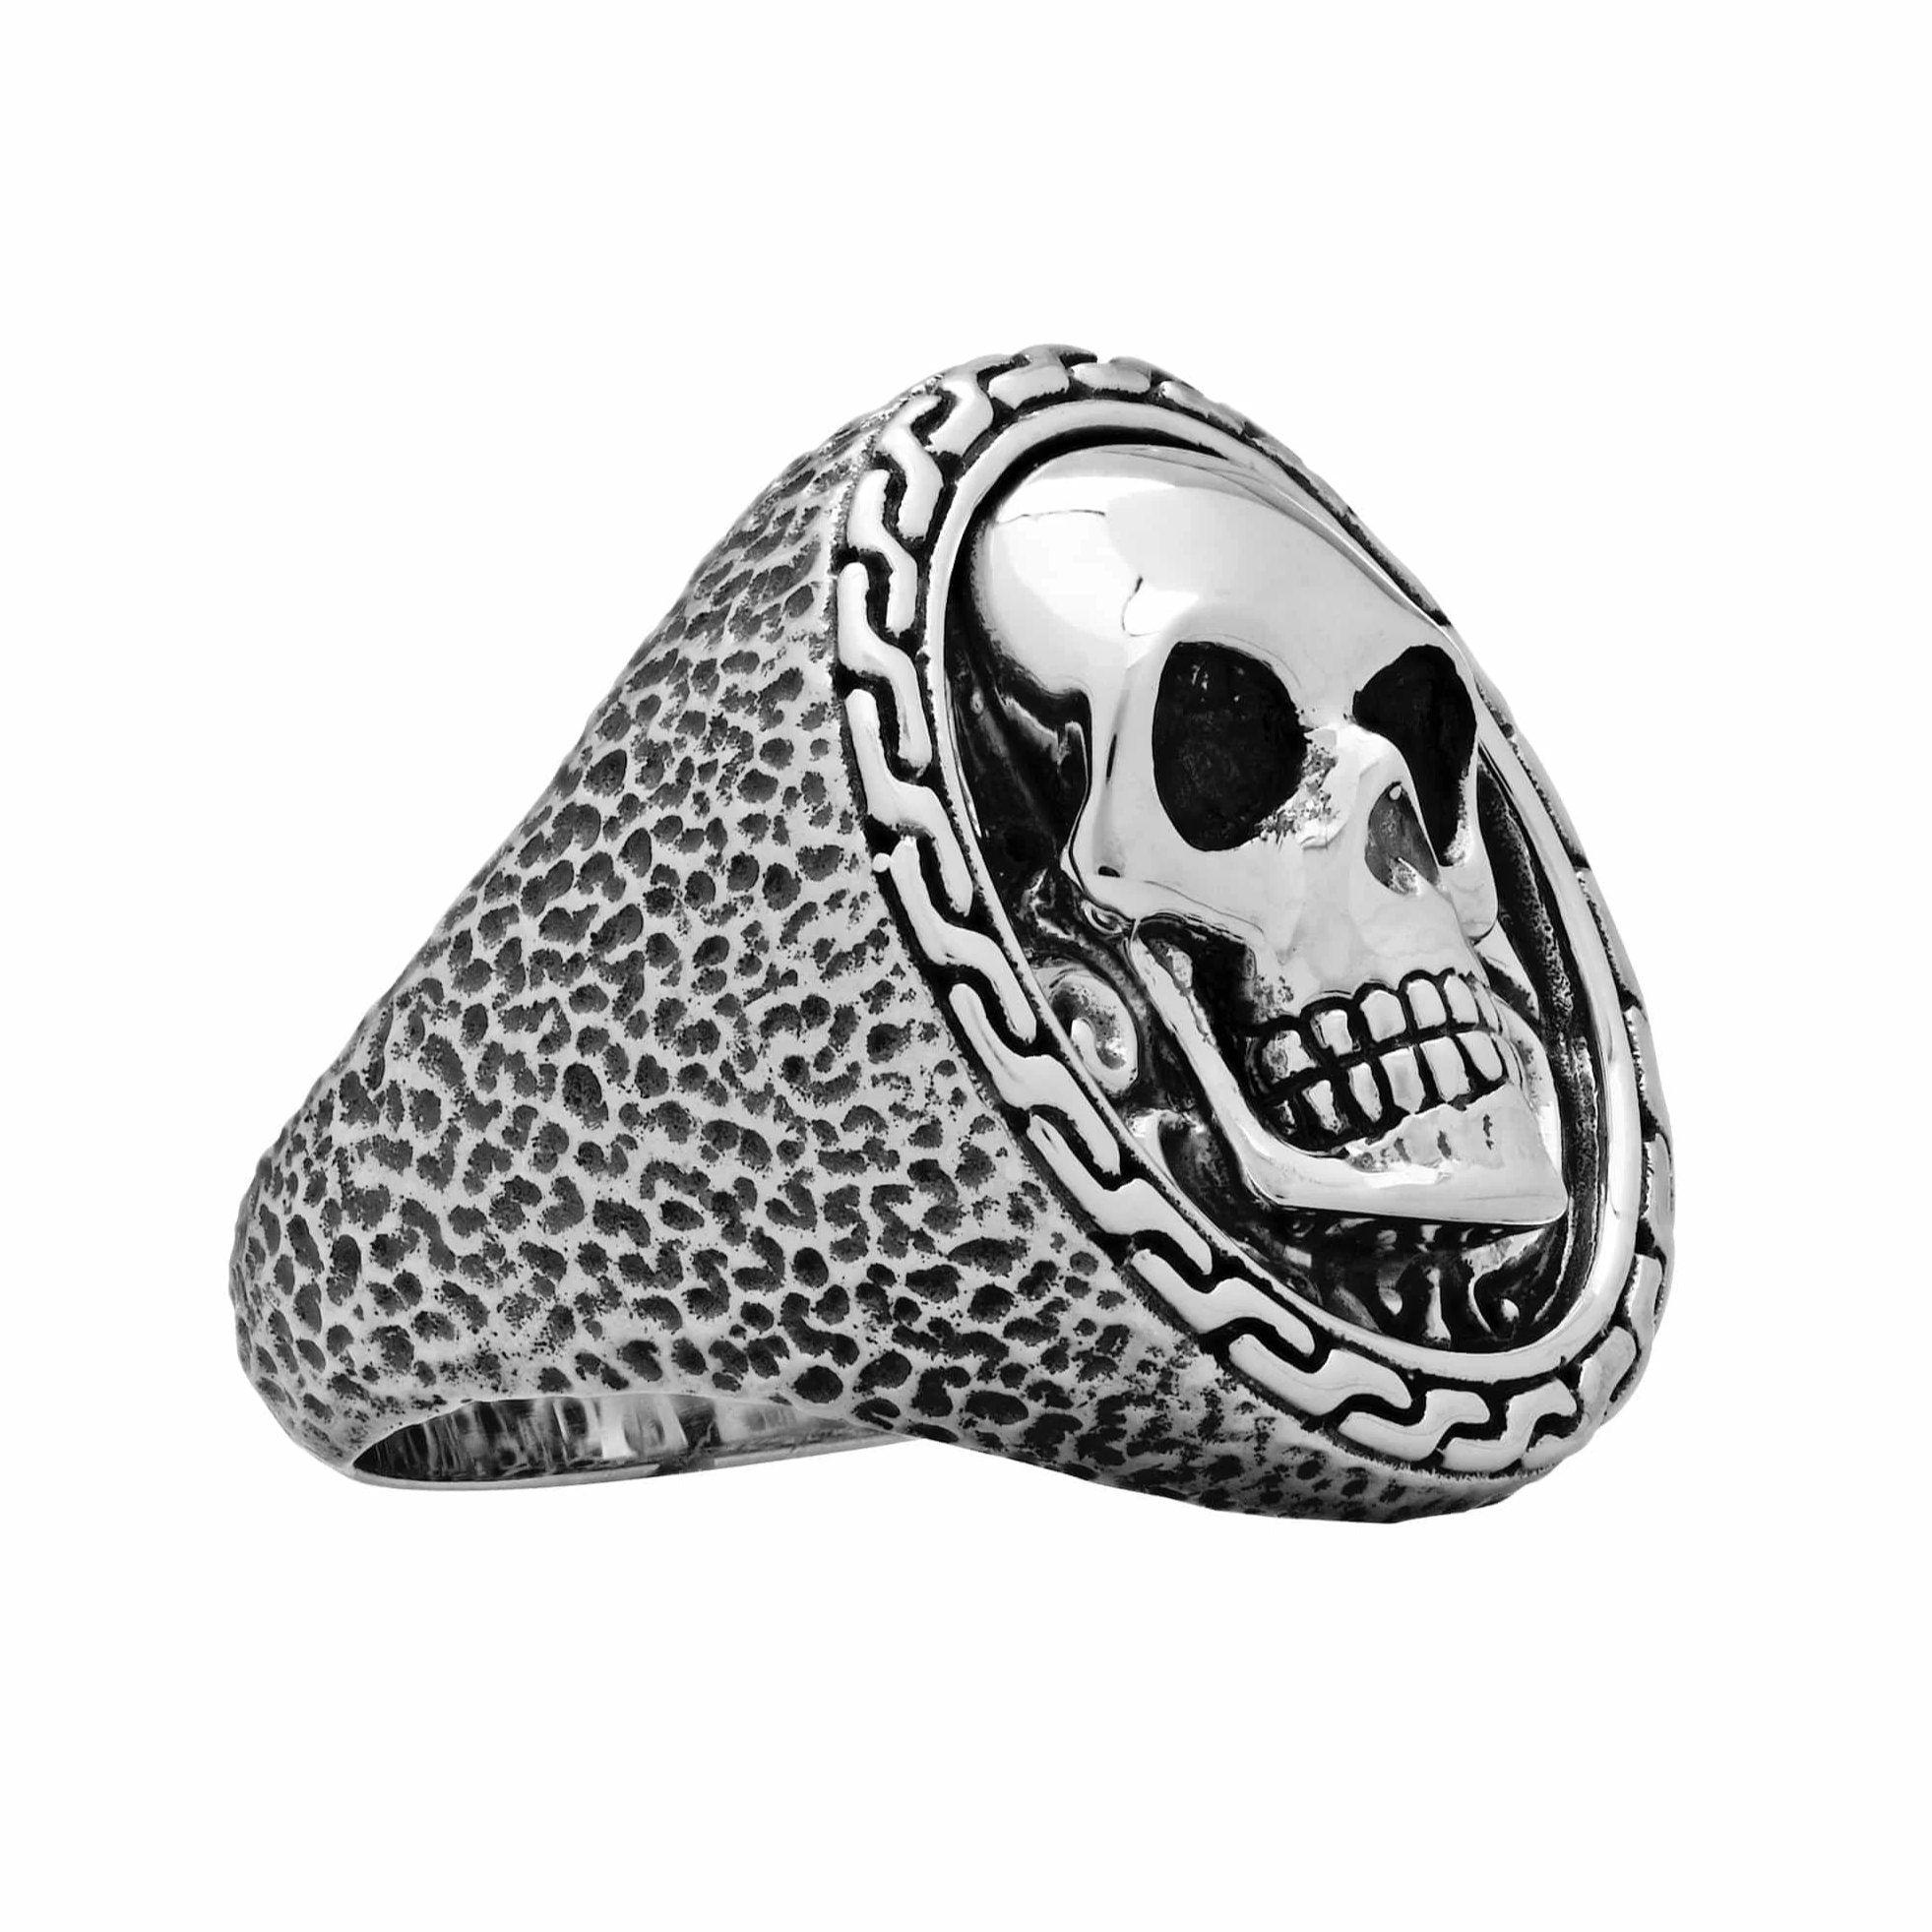 Skull Emblem Ring - Silver Phantom Jewelry